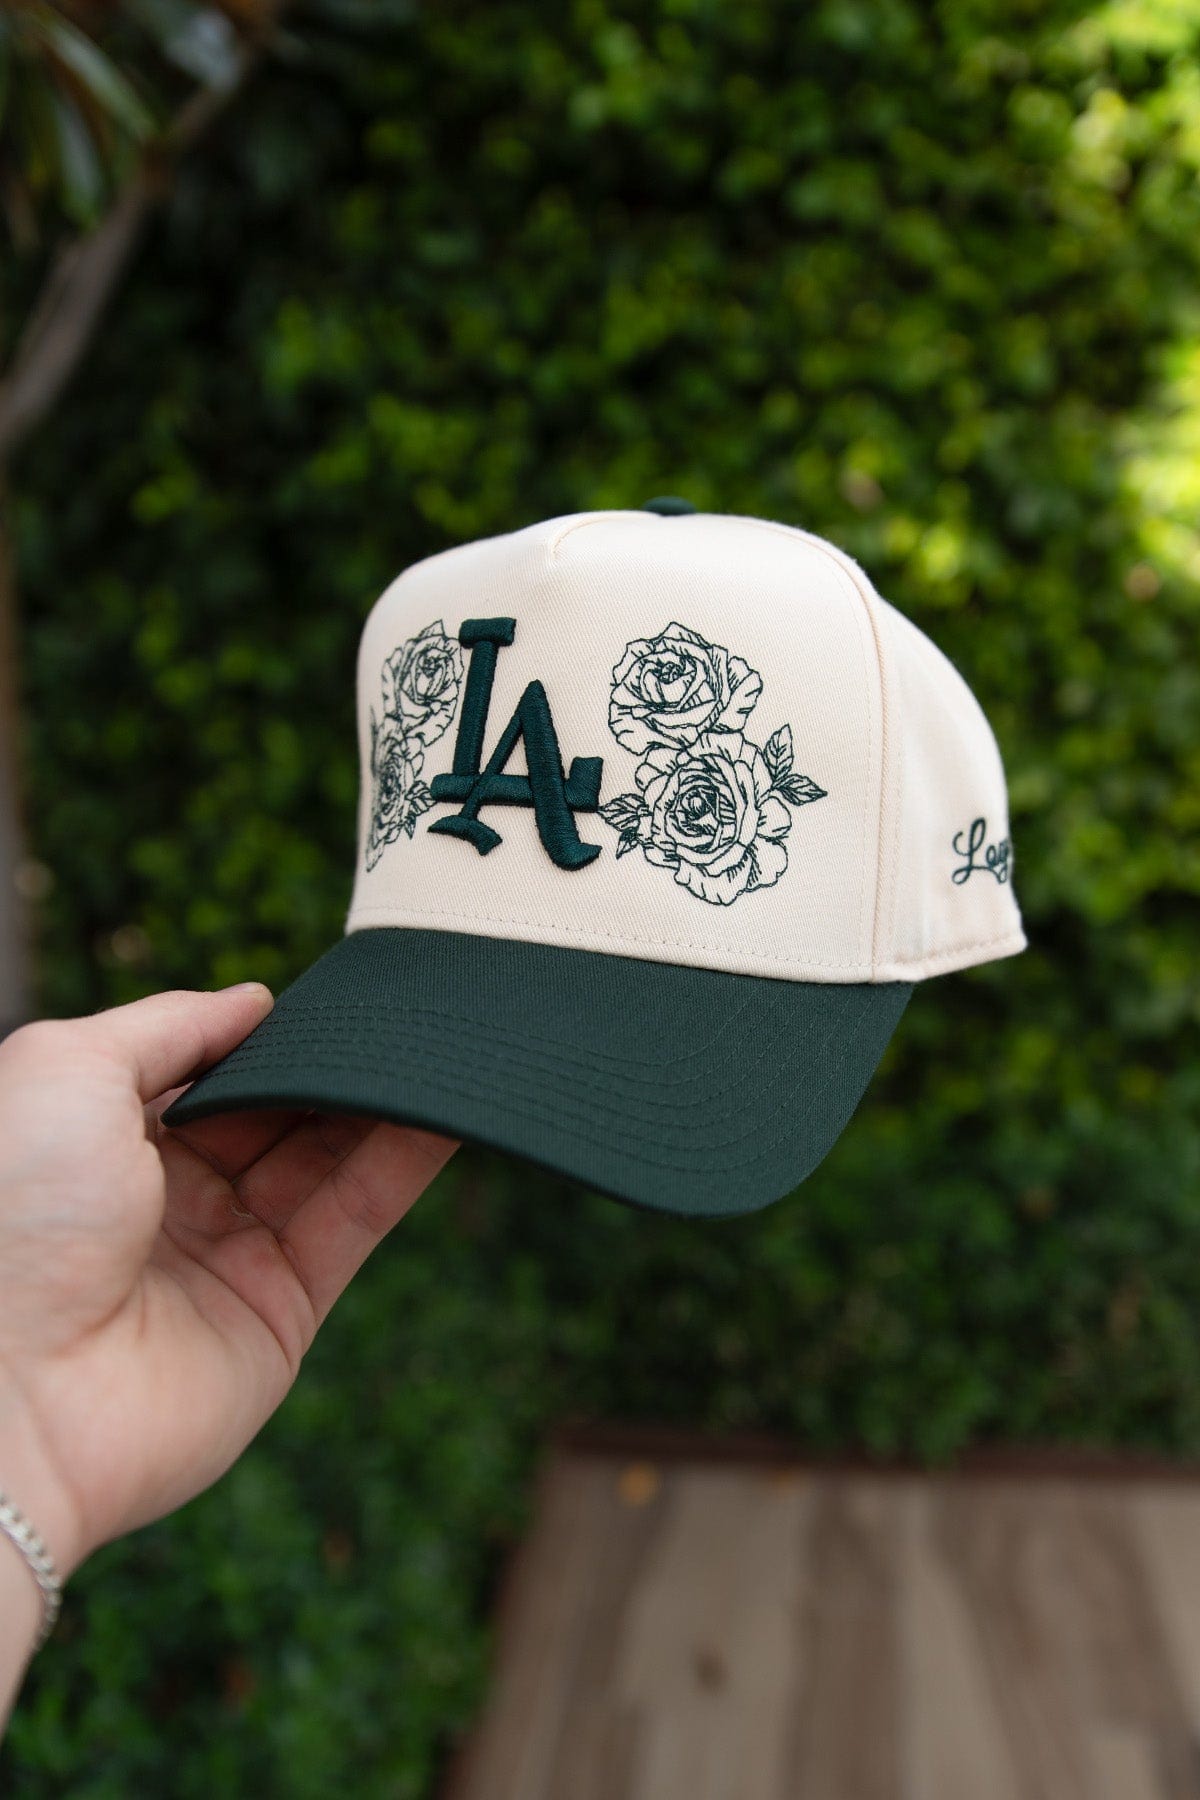 LA 'Roses' v2 Premium Snapback